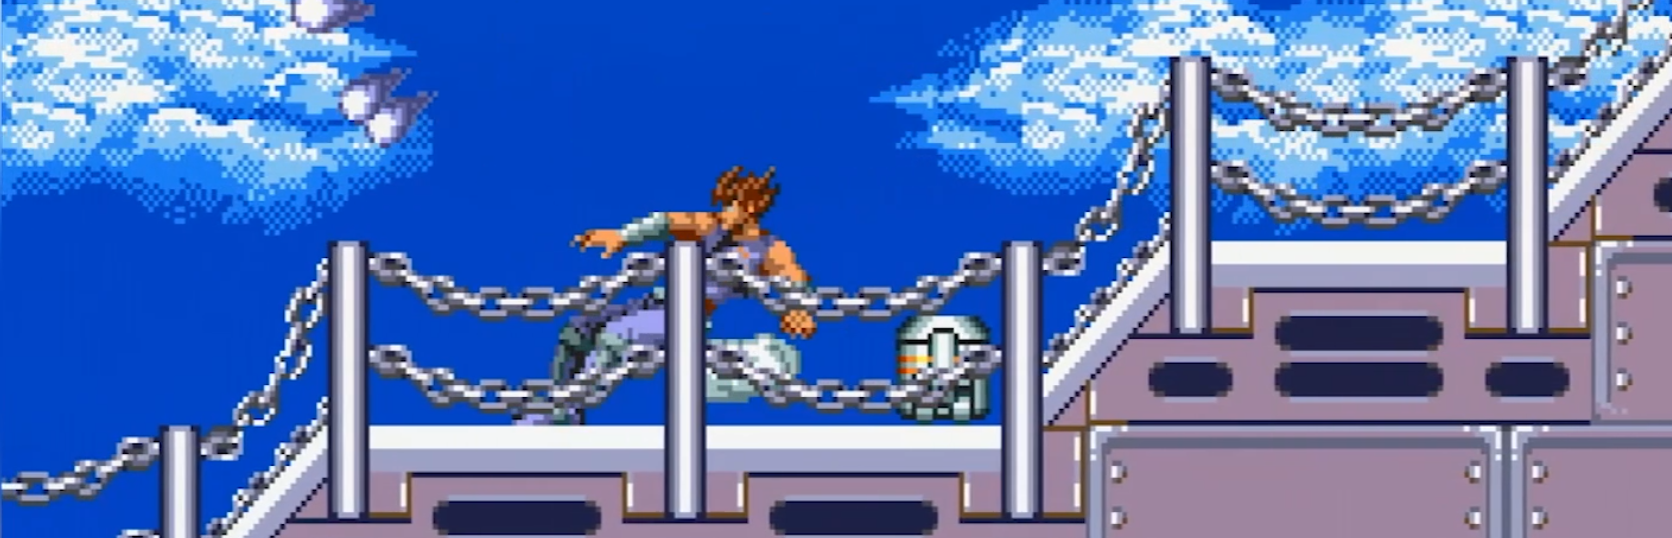 Sega Genesis Strider 2